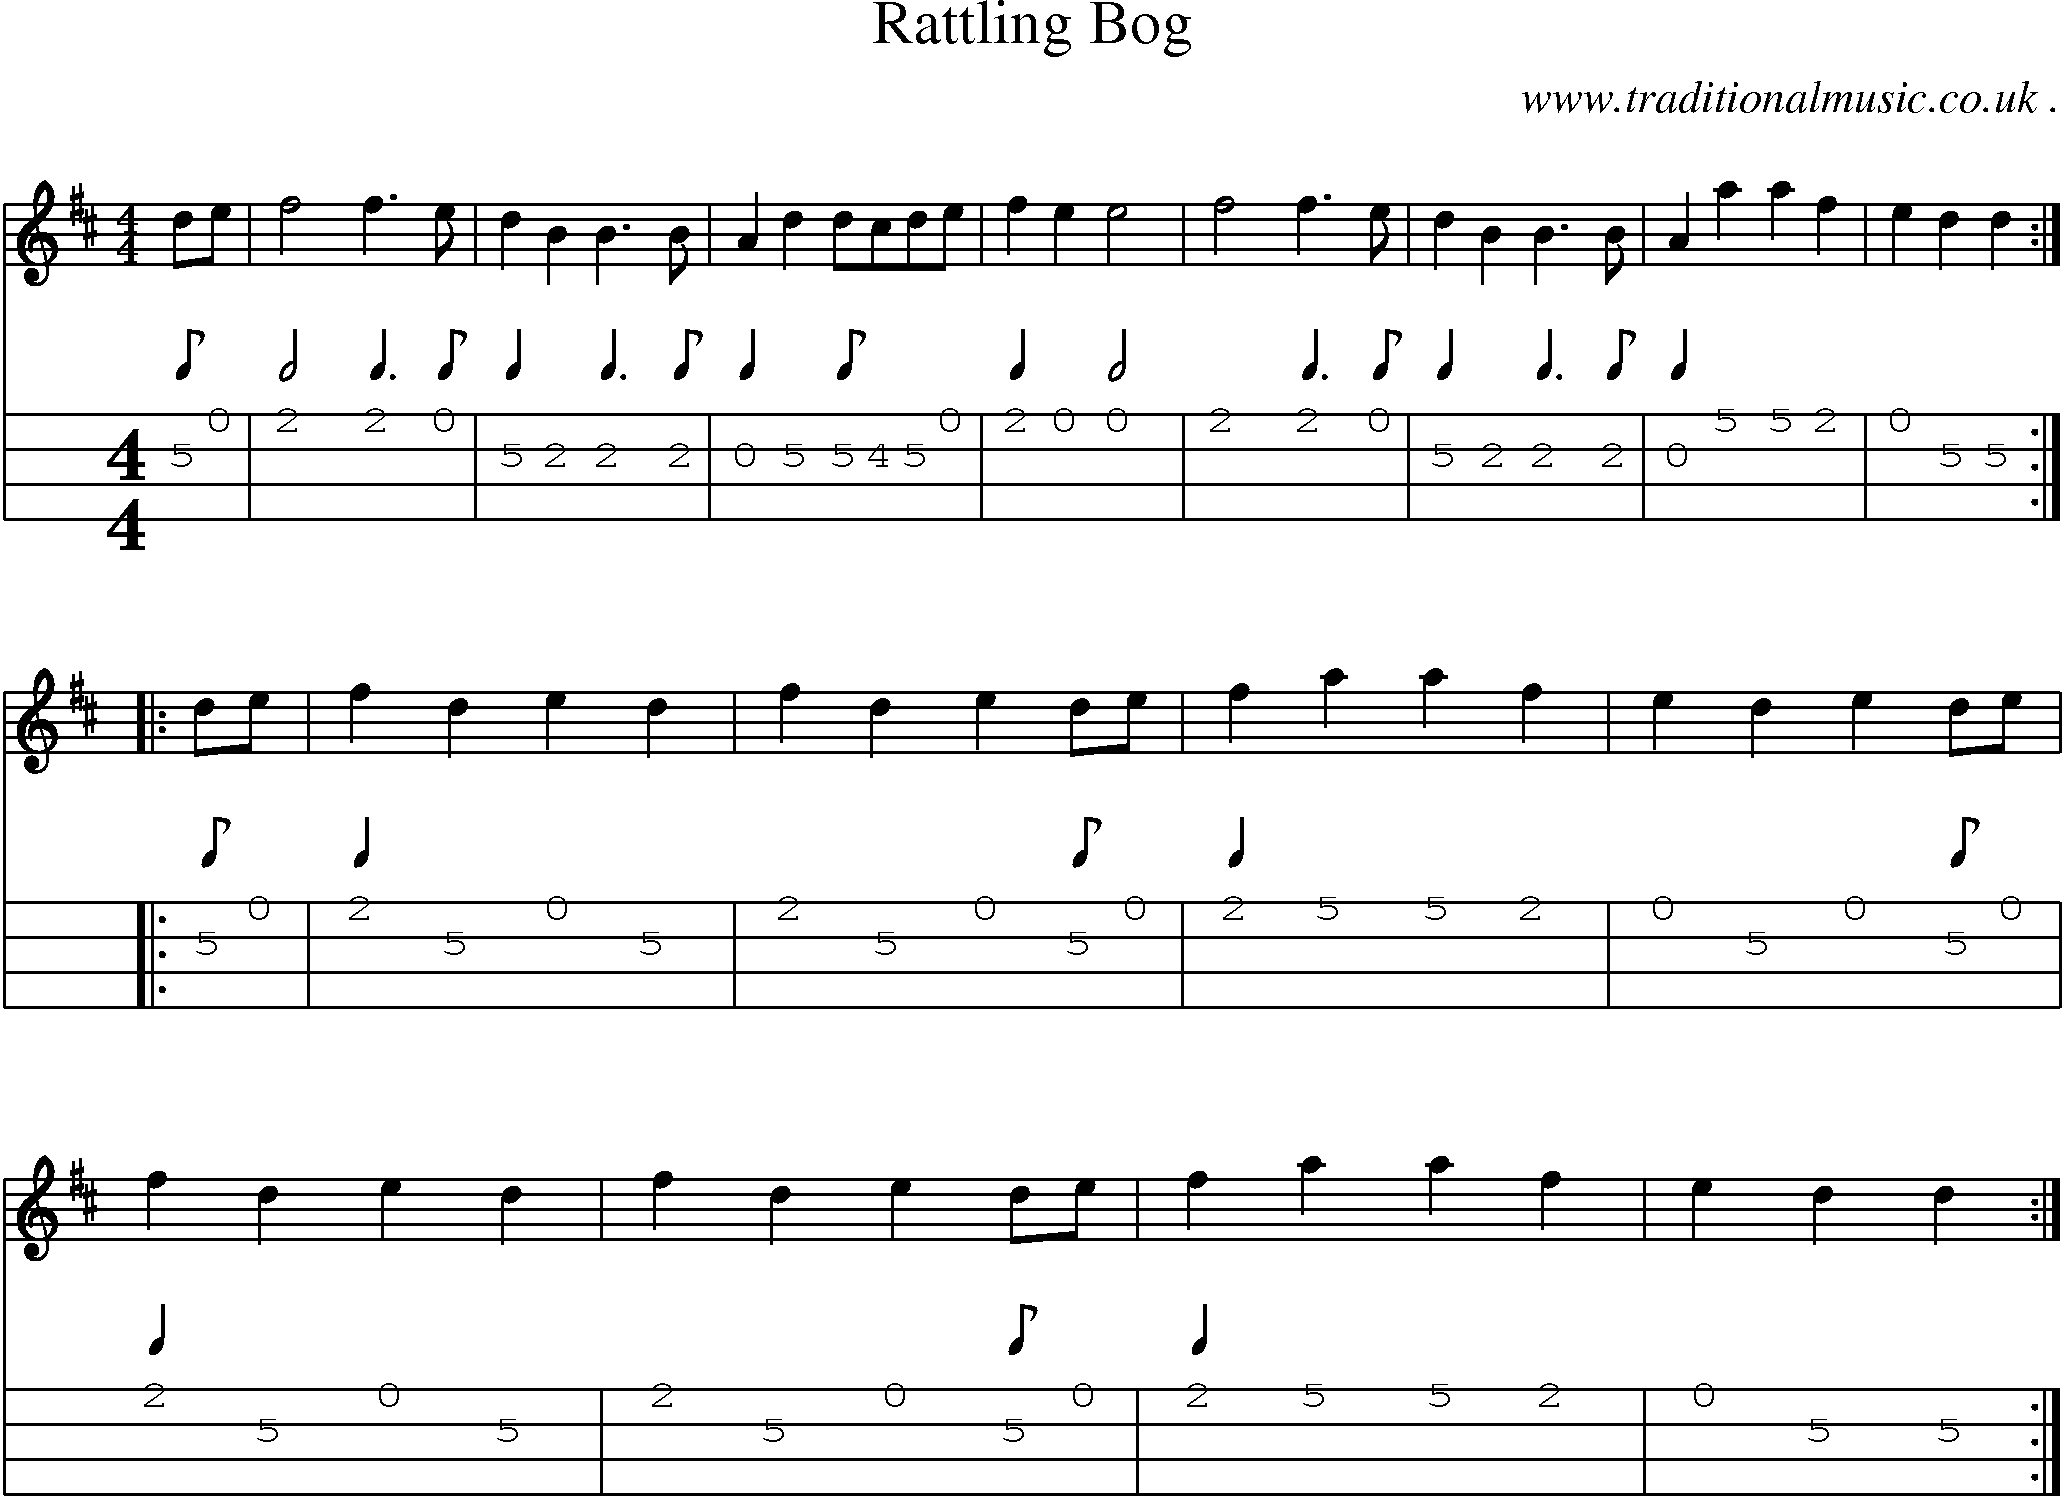 Sheet-Music and Mandolin Tabs for Rattling Bog